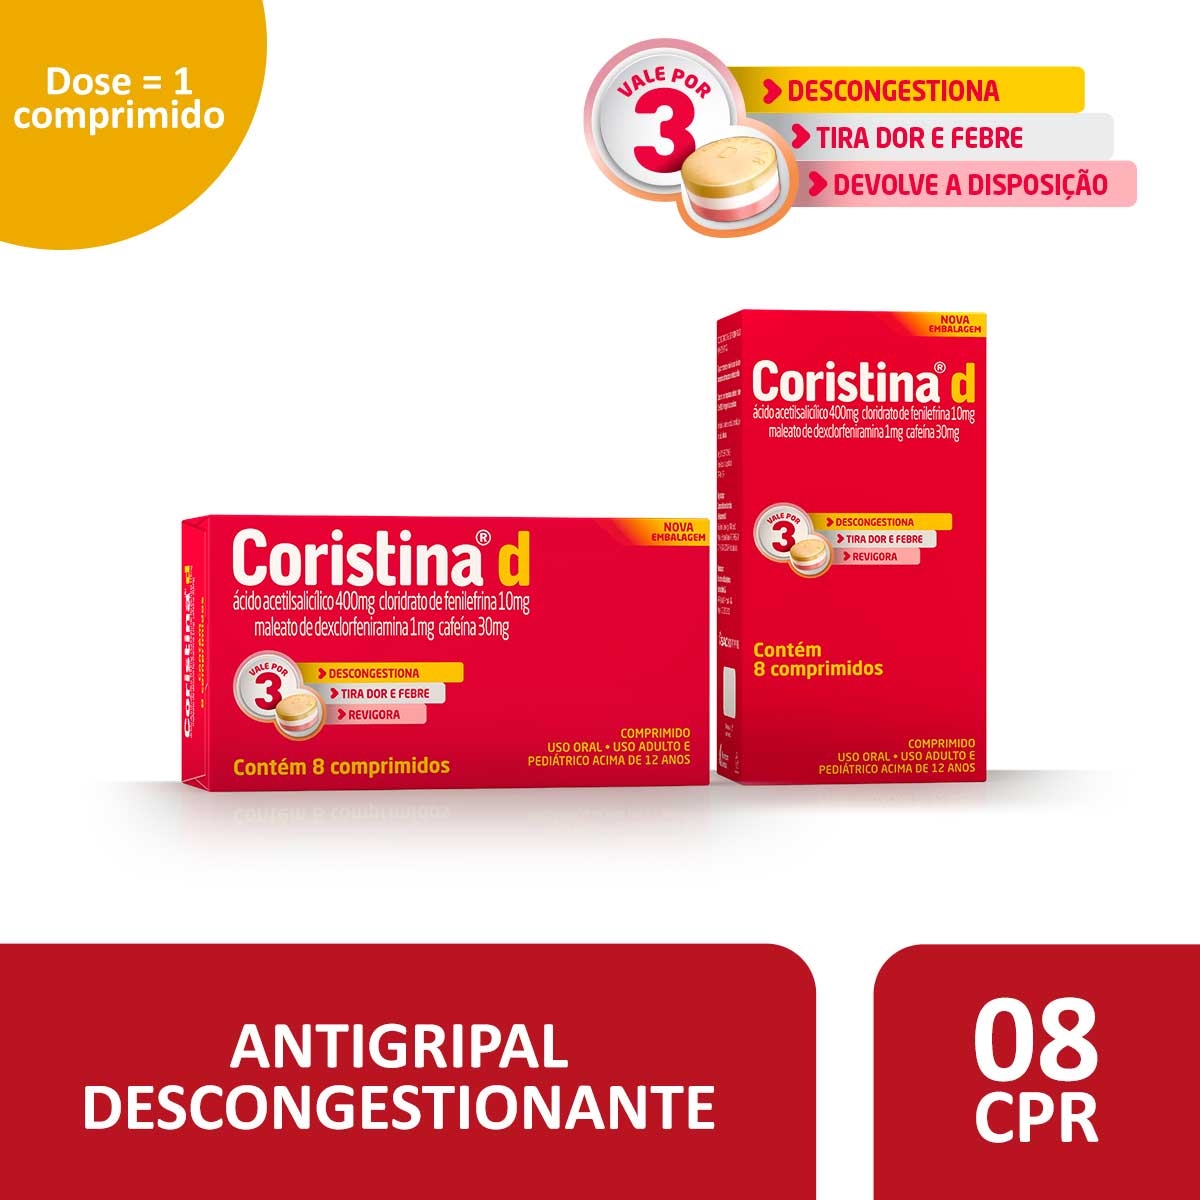 Coristina D Ácido Acetilsalicílico 400mg + Maleato de Dexclorfeniramina 1mg + Cloridrato de Fenilefrina 10mg + Cafeína 30mg 8 comprimidos